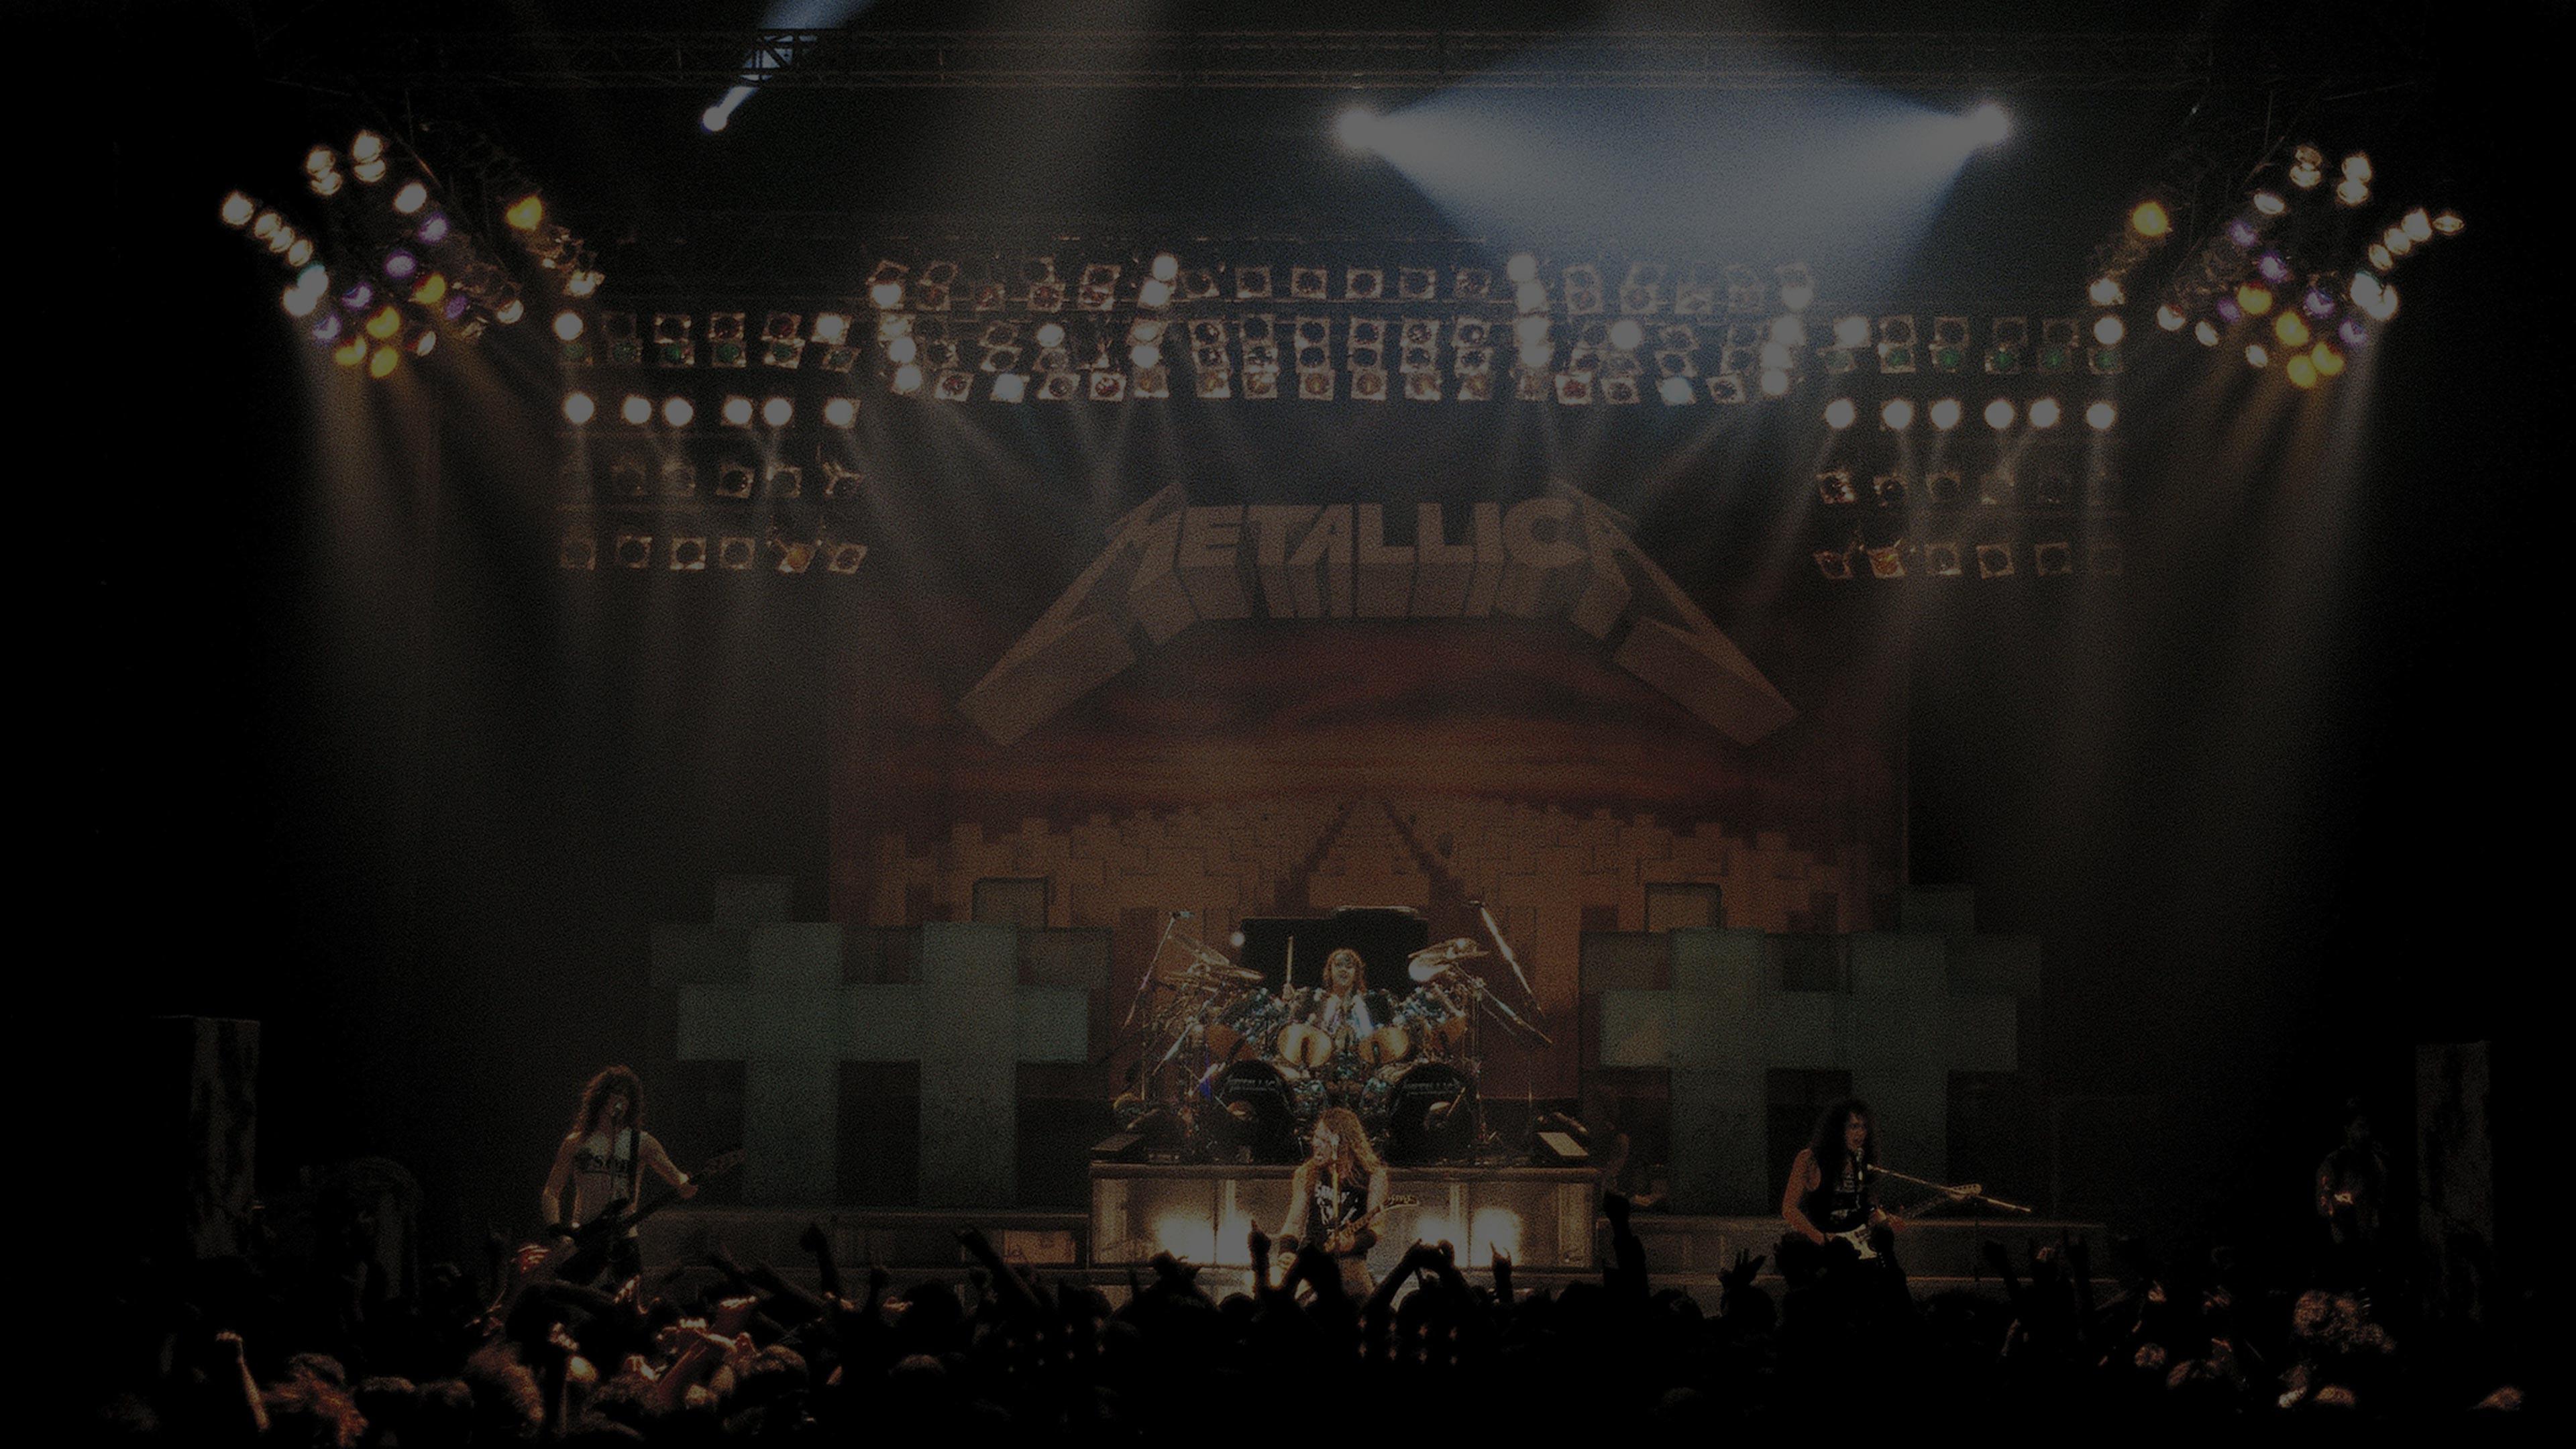 Metallica at Agora Ballroom in West Hartford, CT on November 30, 1986